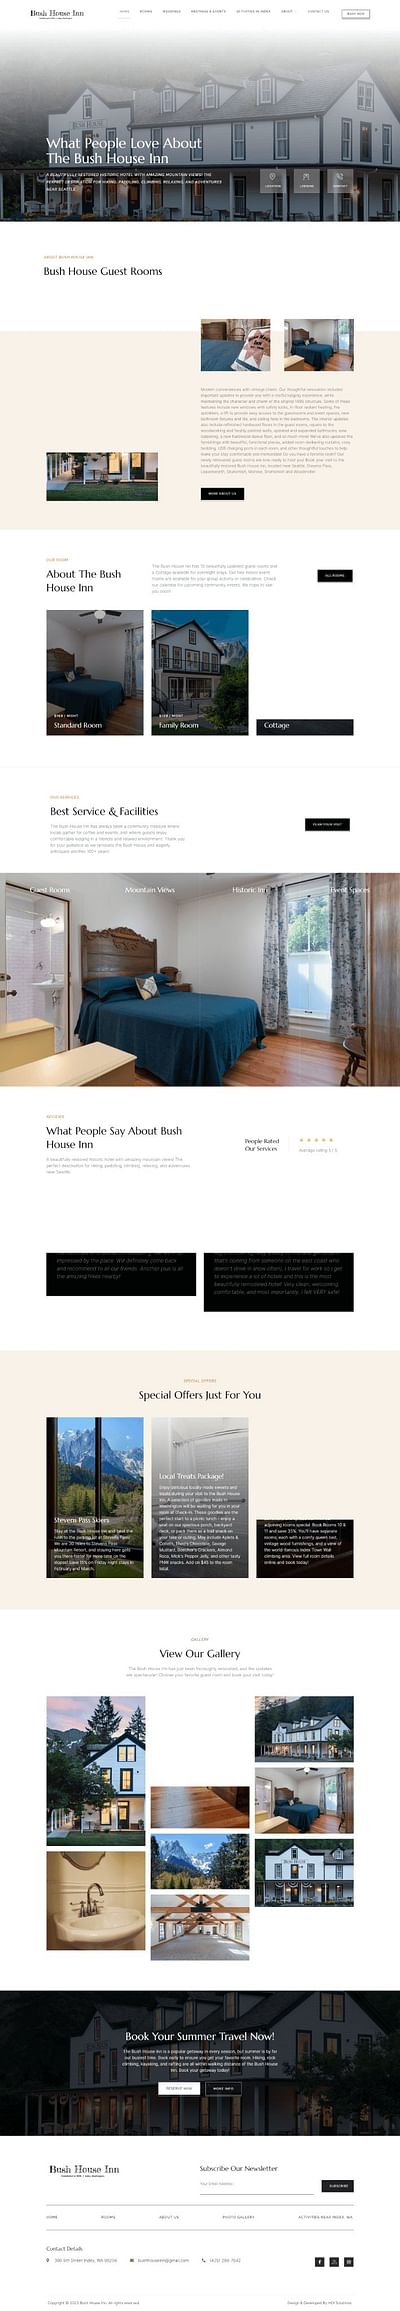 Bush House Inn - Website Creatie